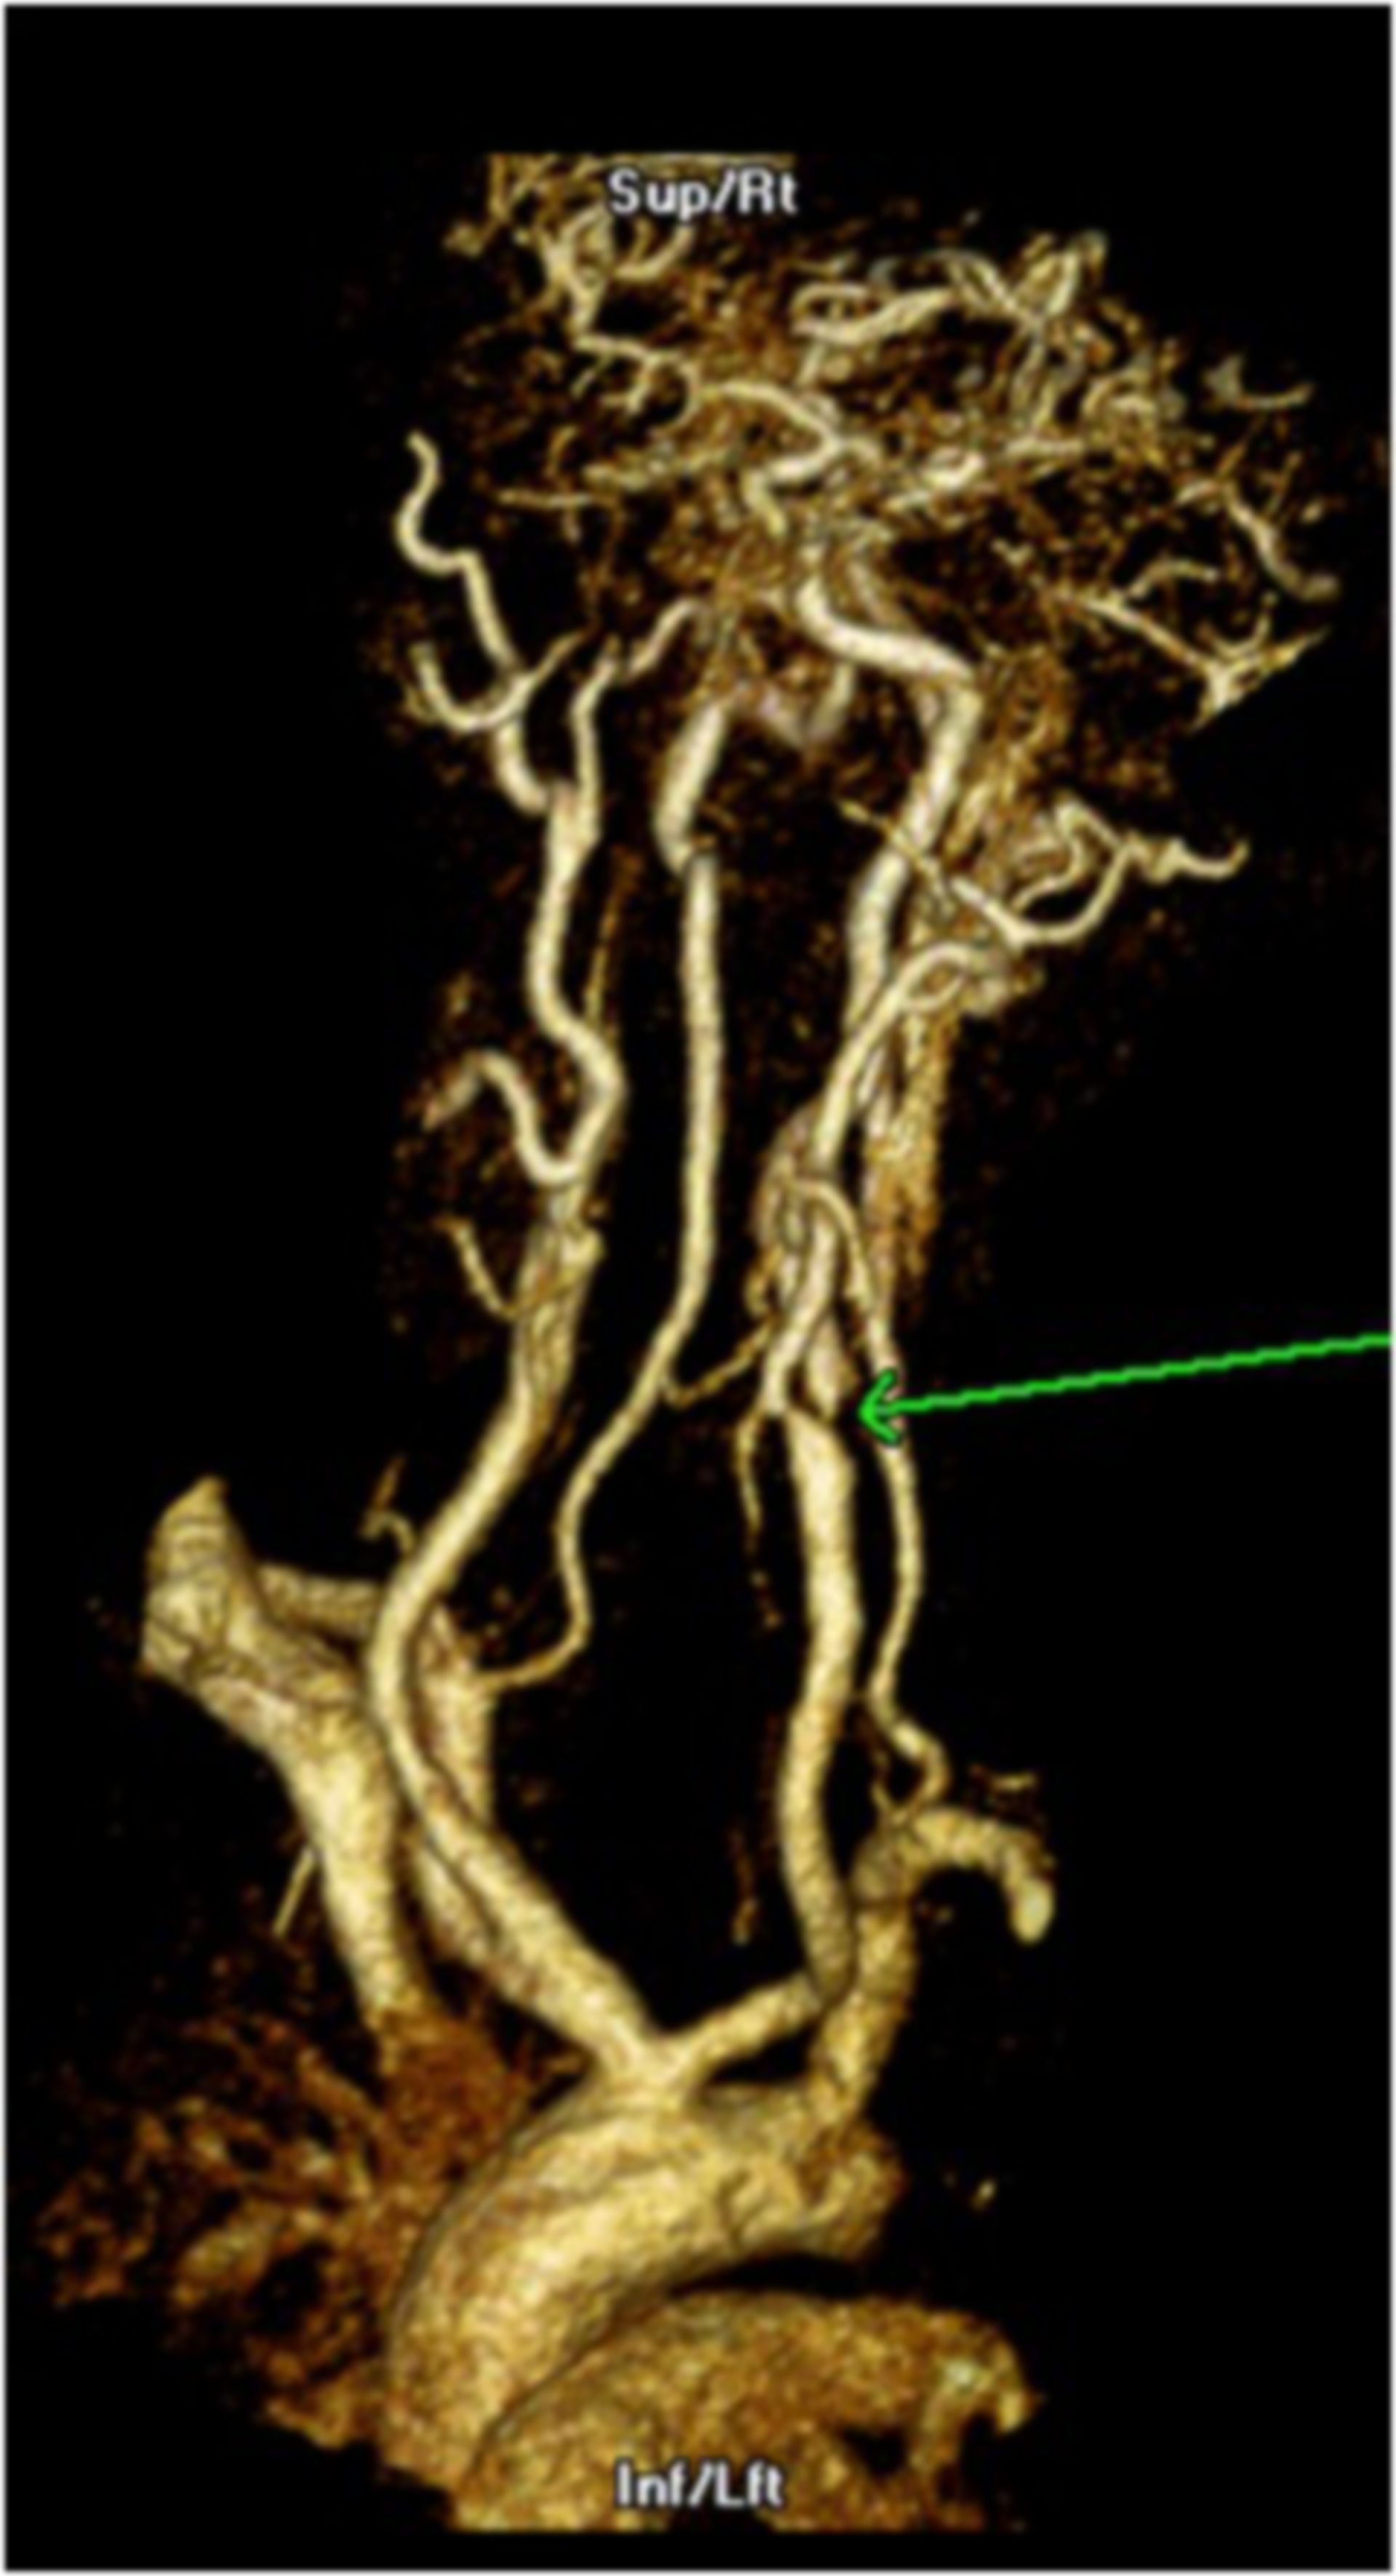 CT- Angiographie einer Carotisstenose